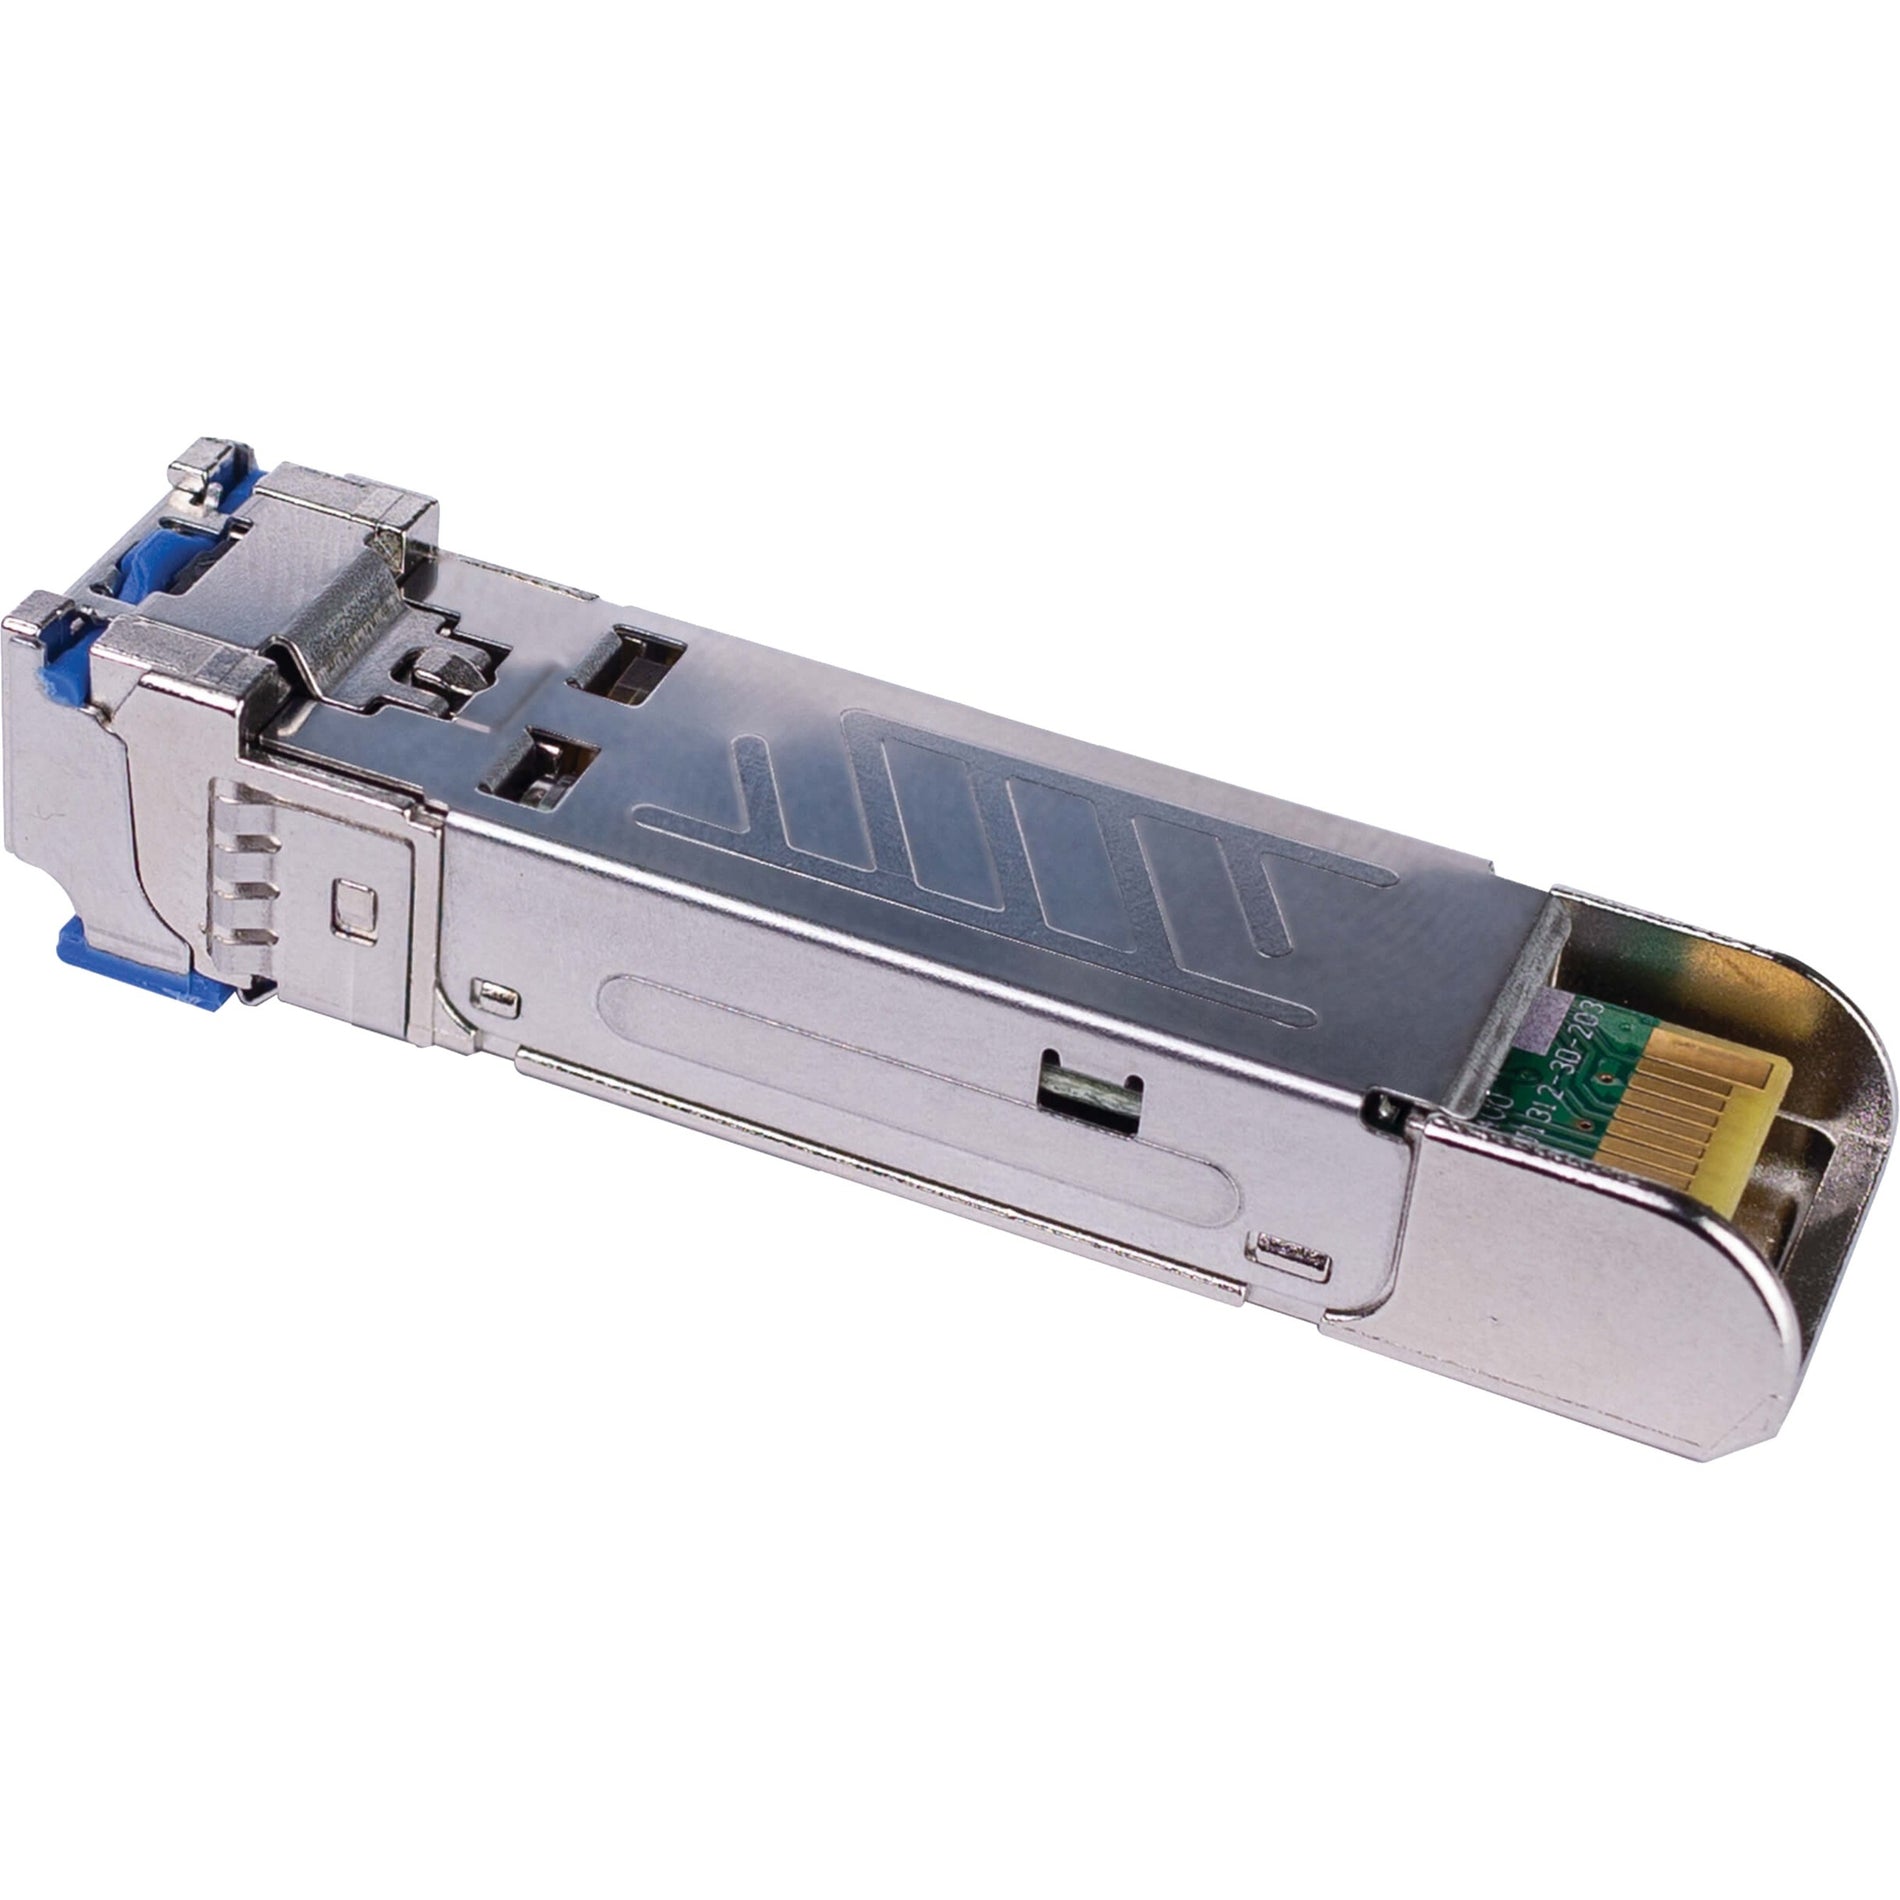 Tripp Lite N286I-1P25GLXD1 SFP (mini-GBIC) Module, 1 Year Limited Warranty, TAA Compliant, Gigabit Ethernet, Single-mode, Hot-swappable, Hot-pluggable